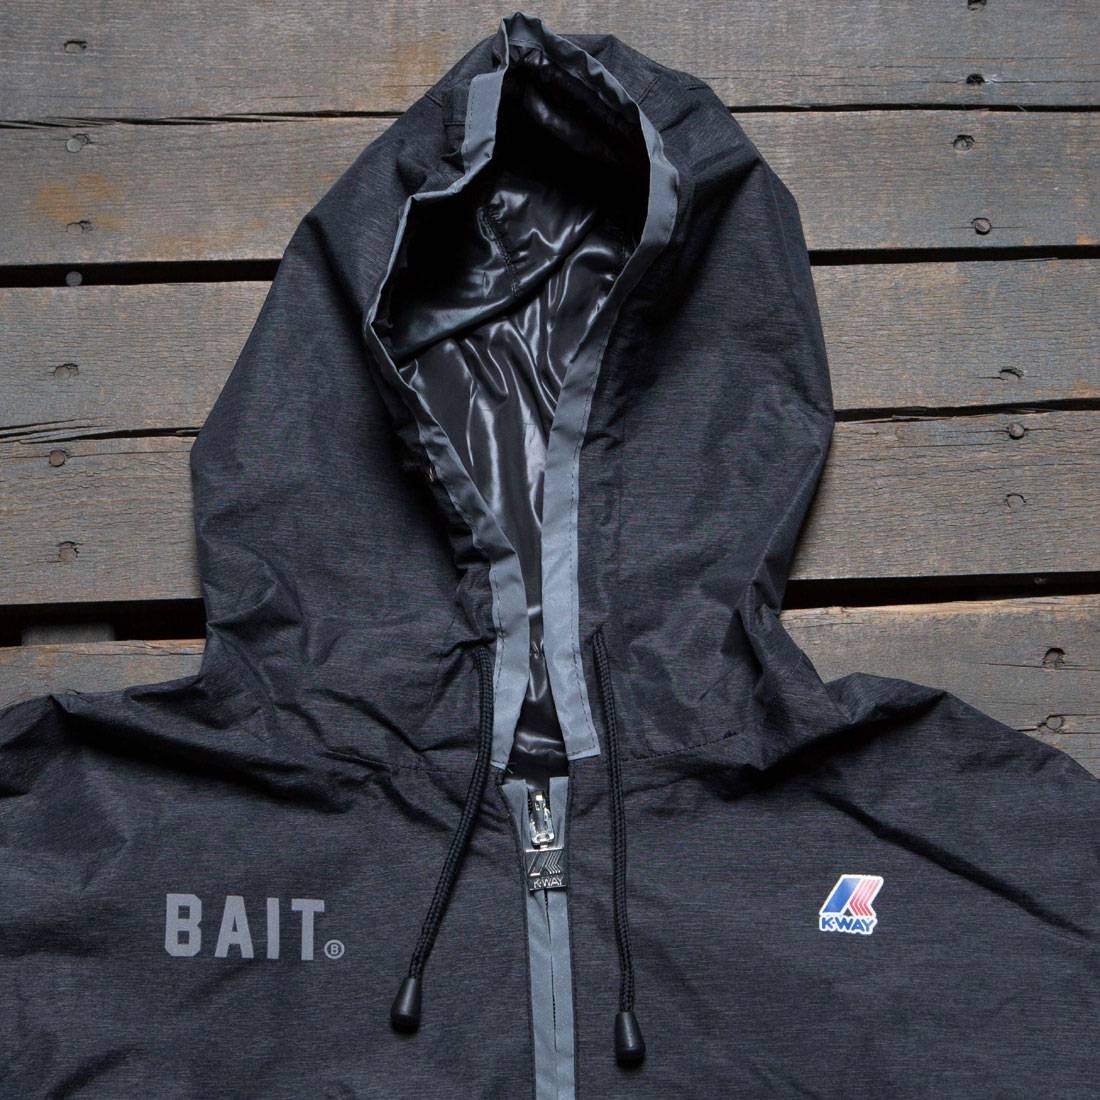 BAIT x K-Way Jacques Light Reflect Jacket (black)